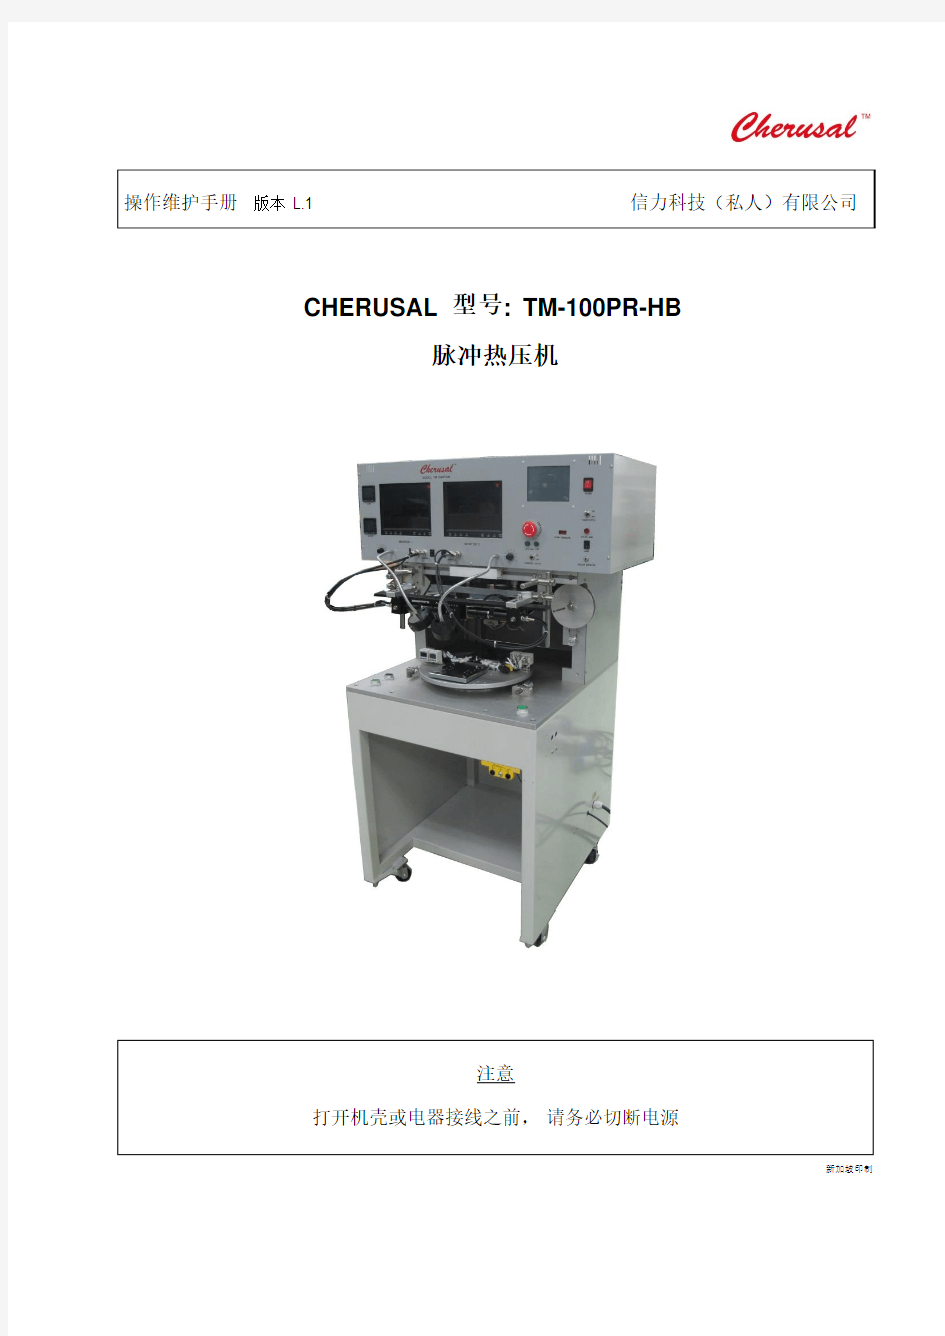 TM-100PR-HB Operation Manual RevL.1 CN (TE14-1138)